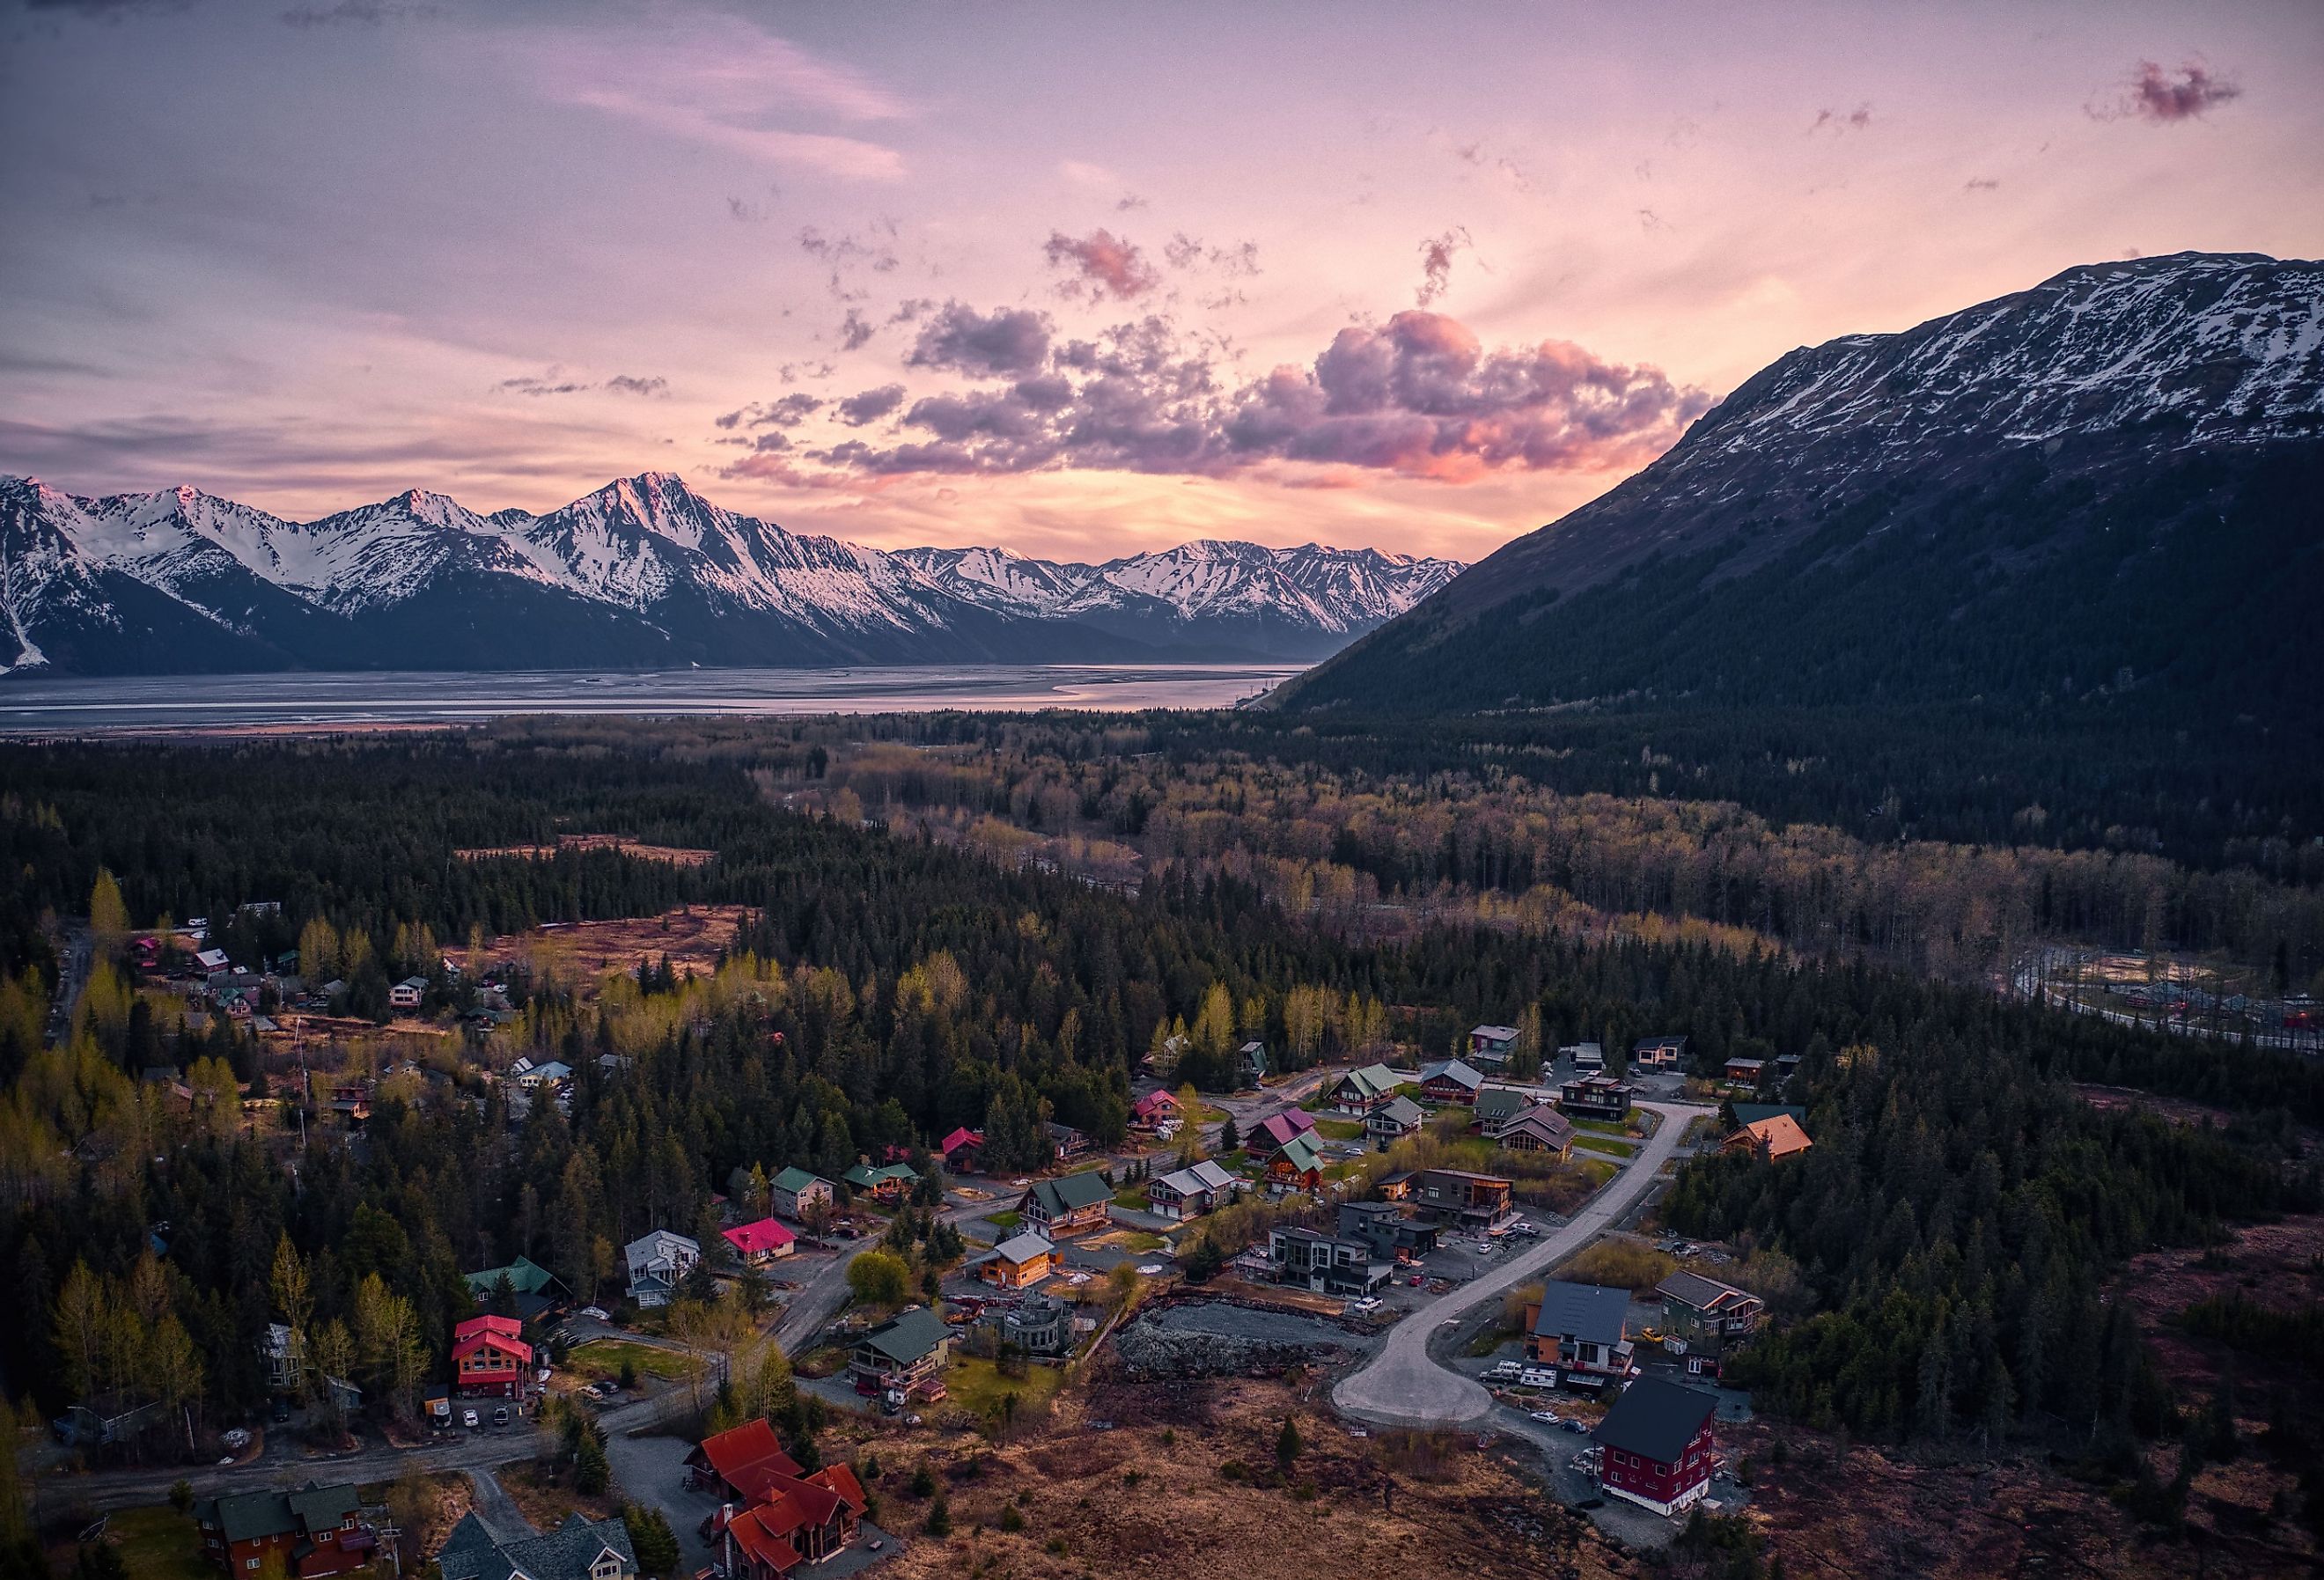 Aerial view of the resort town of Girdwood, Alaska, at sunset.